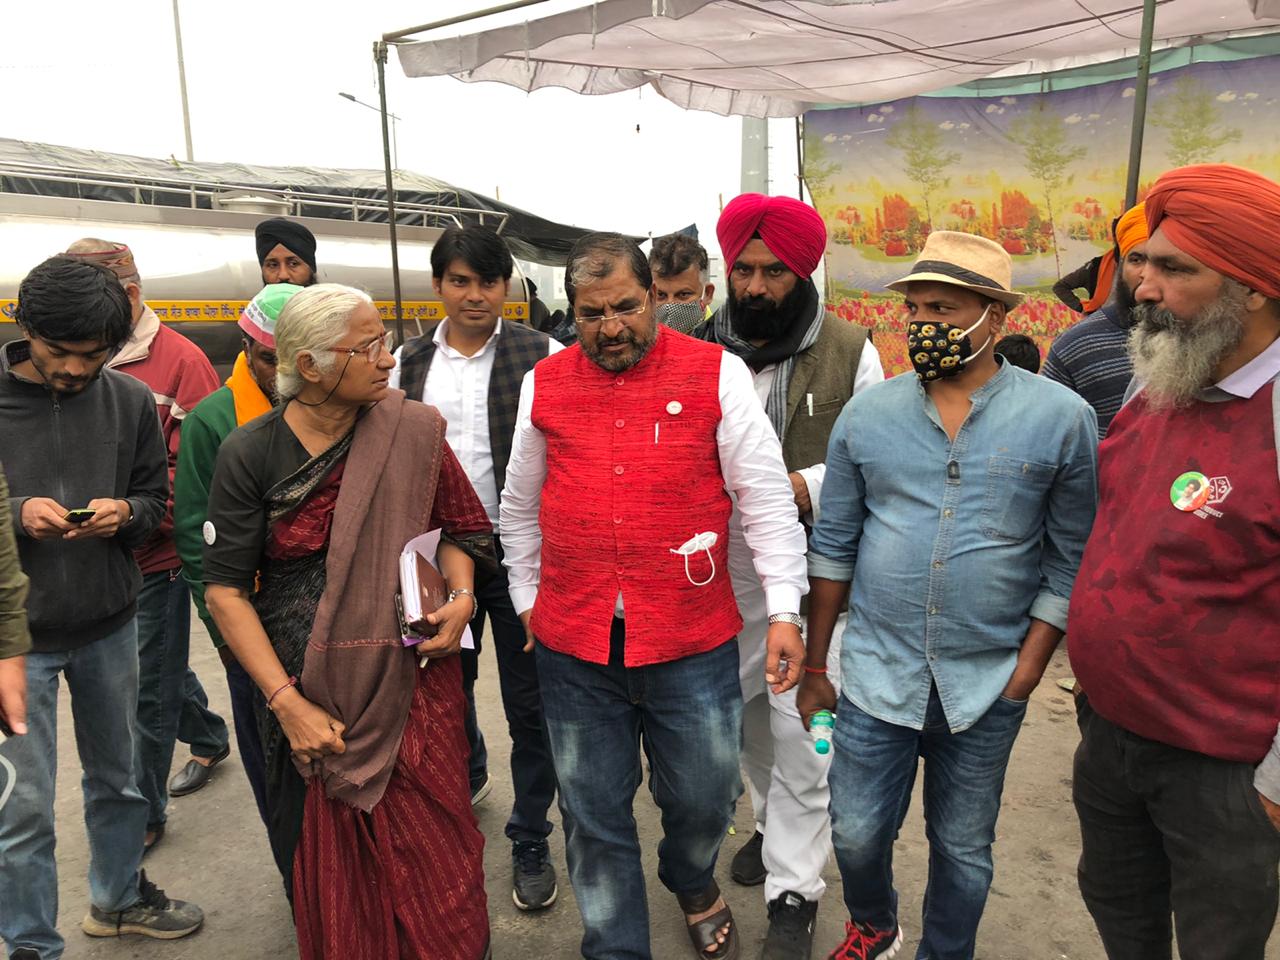 Raju Shetty visited the farmer agitation